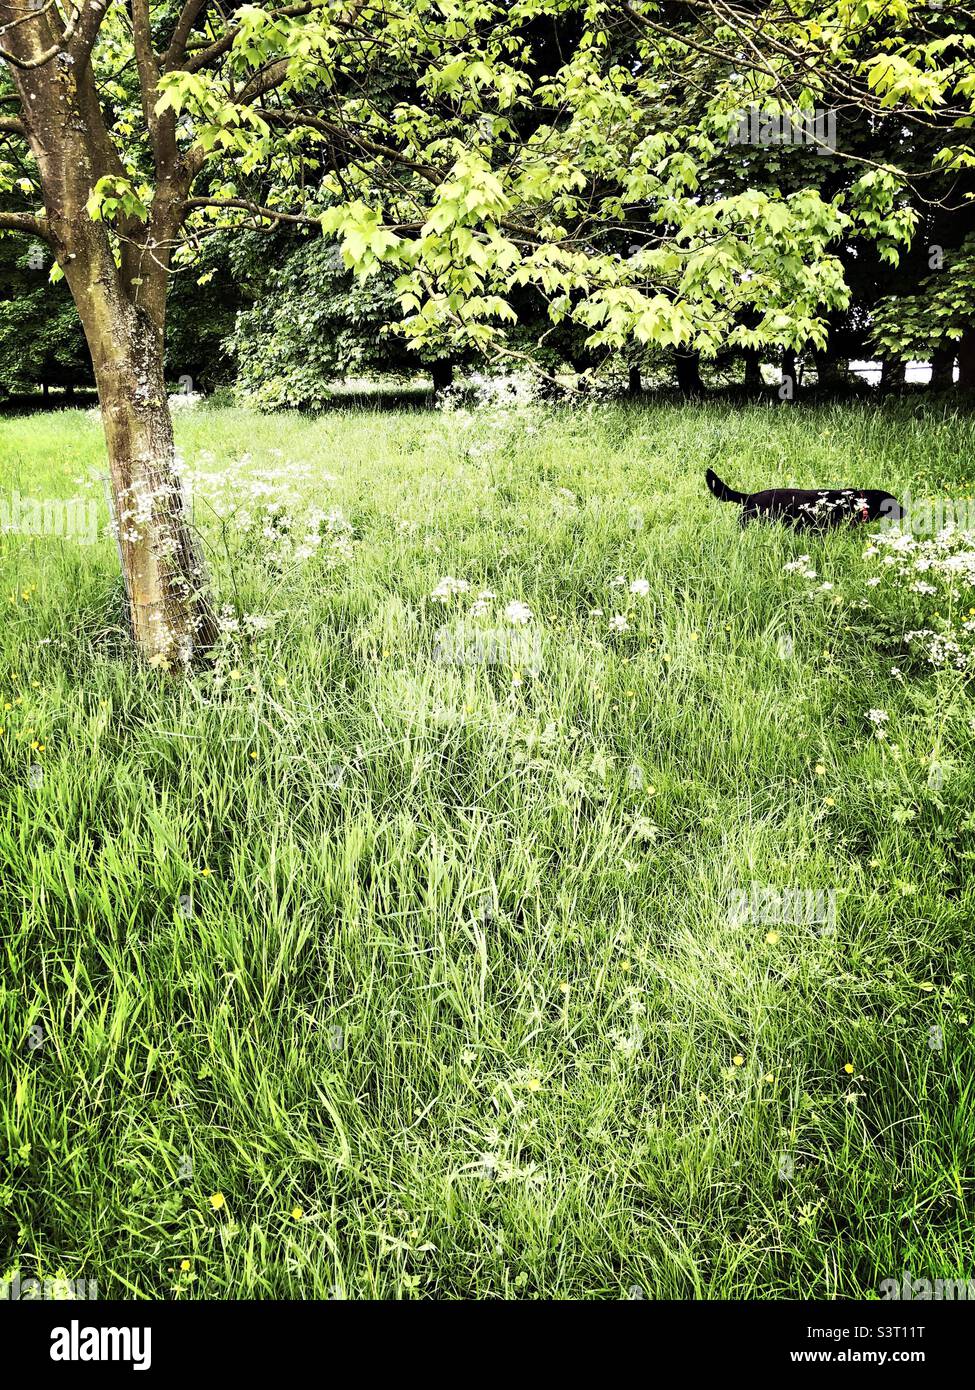 Black Labrador dog walking around in long grass. United Kingdom Stock Photo